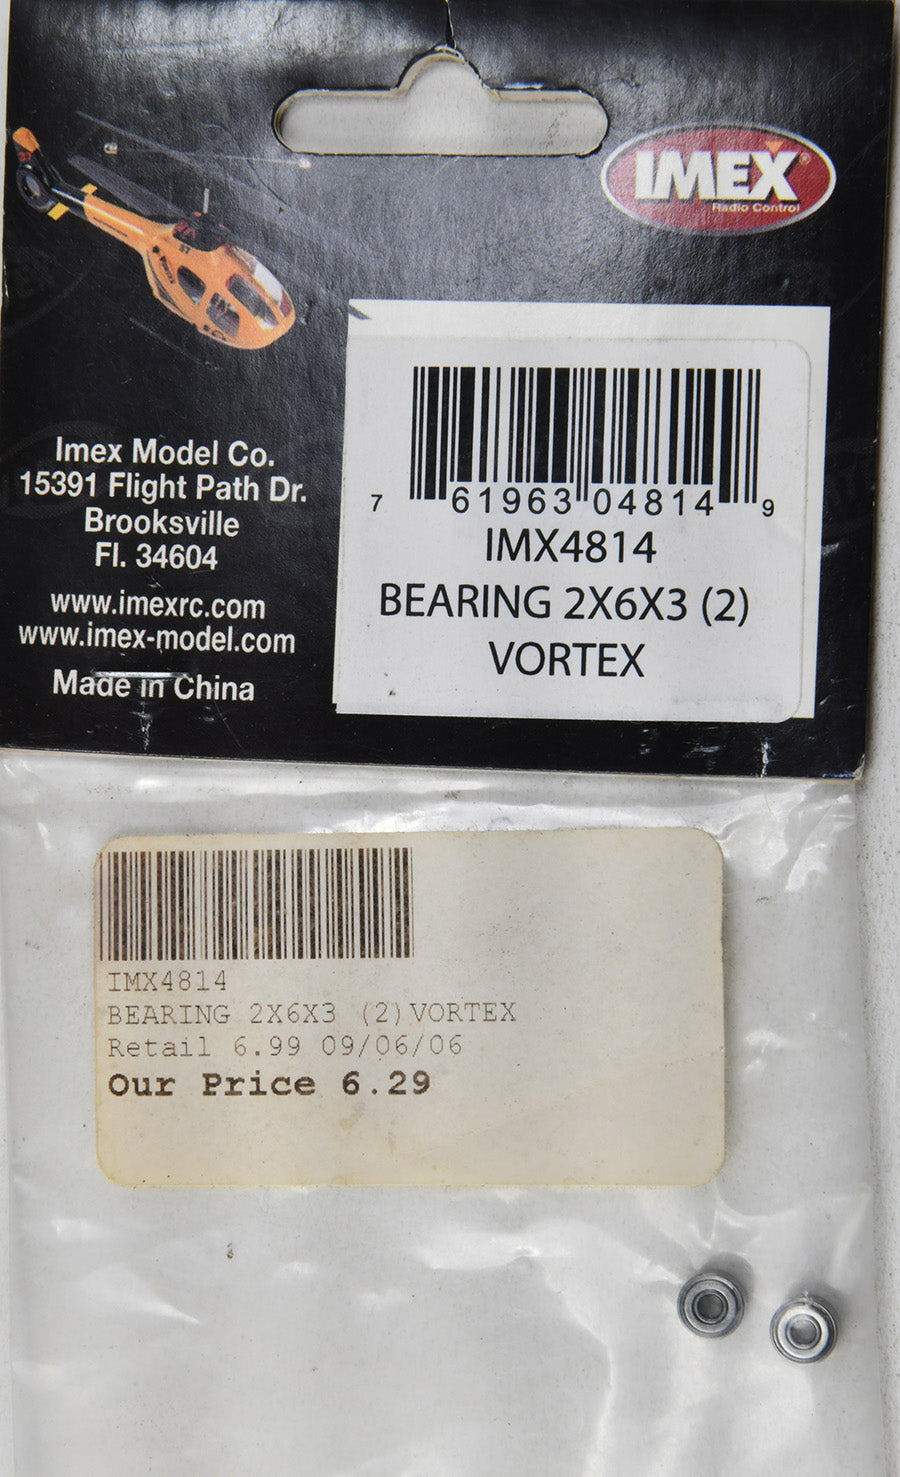 Imex 4814 Bearing 2x6x3 (2) Vortex IMX4814